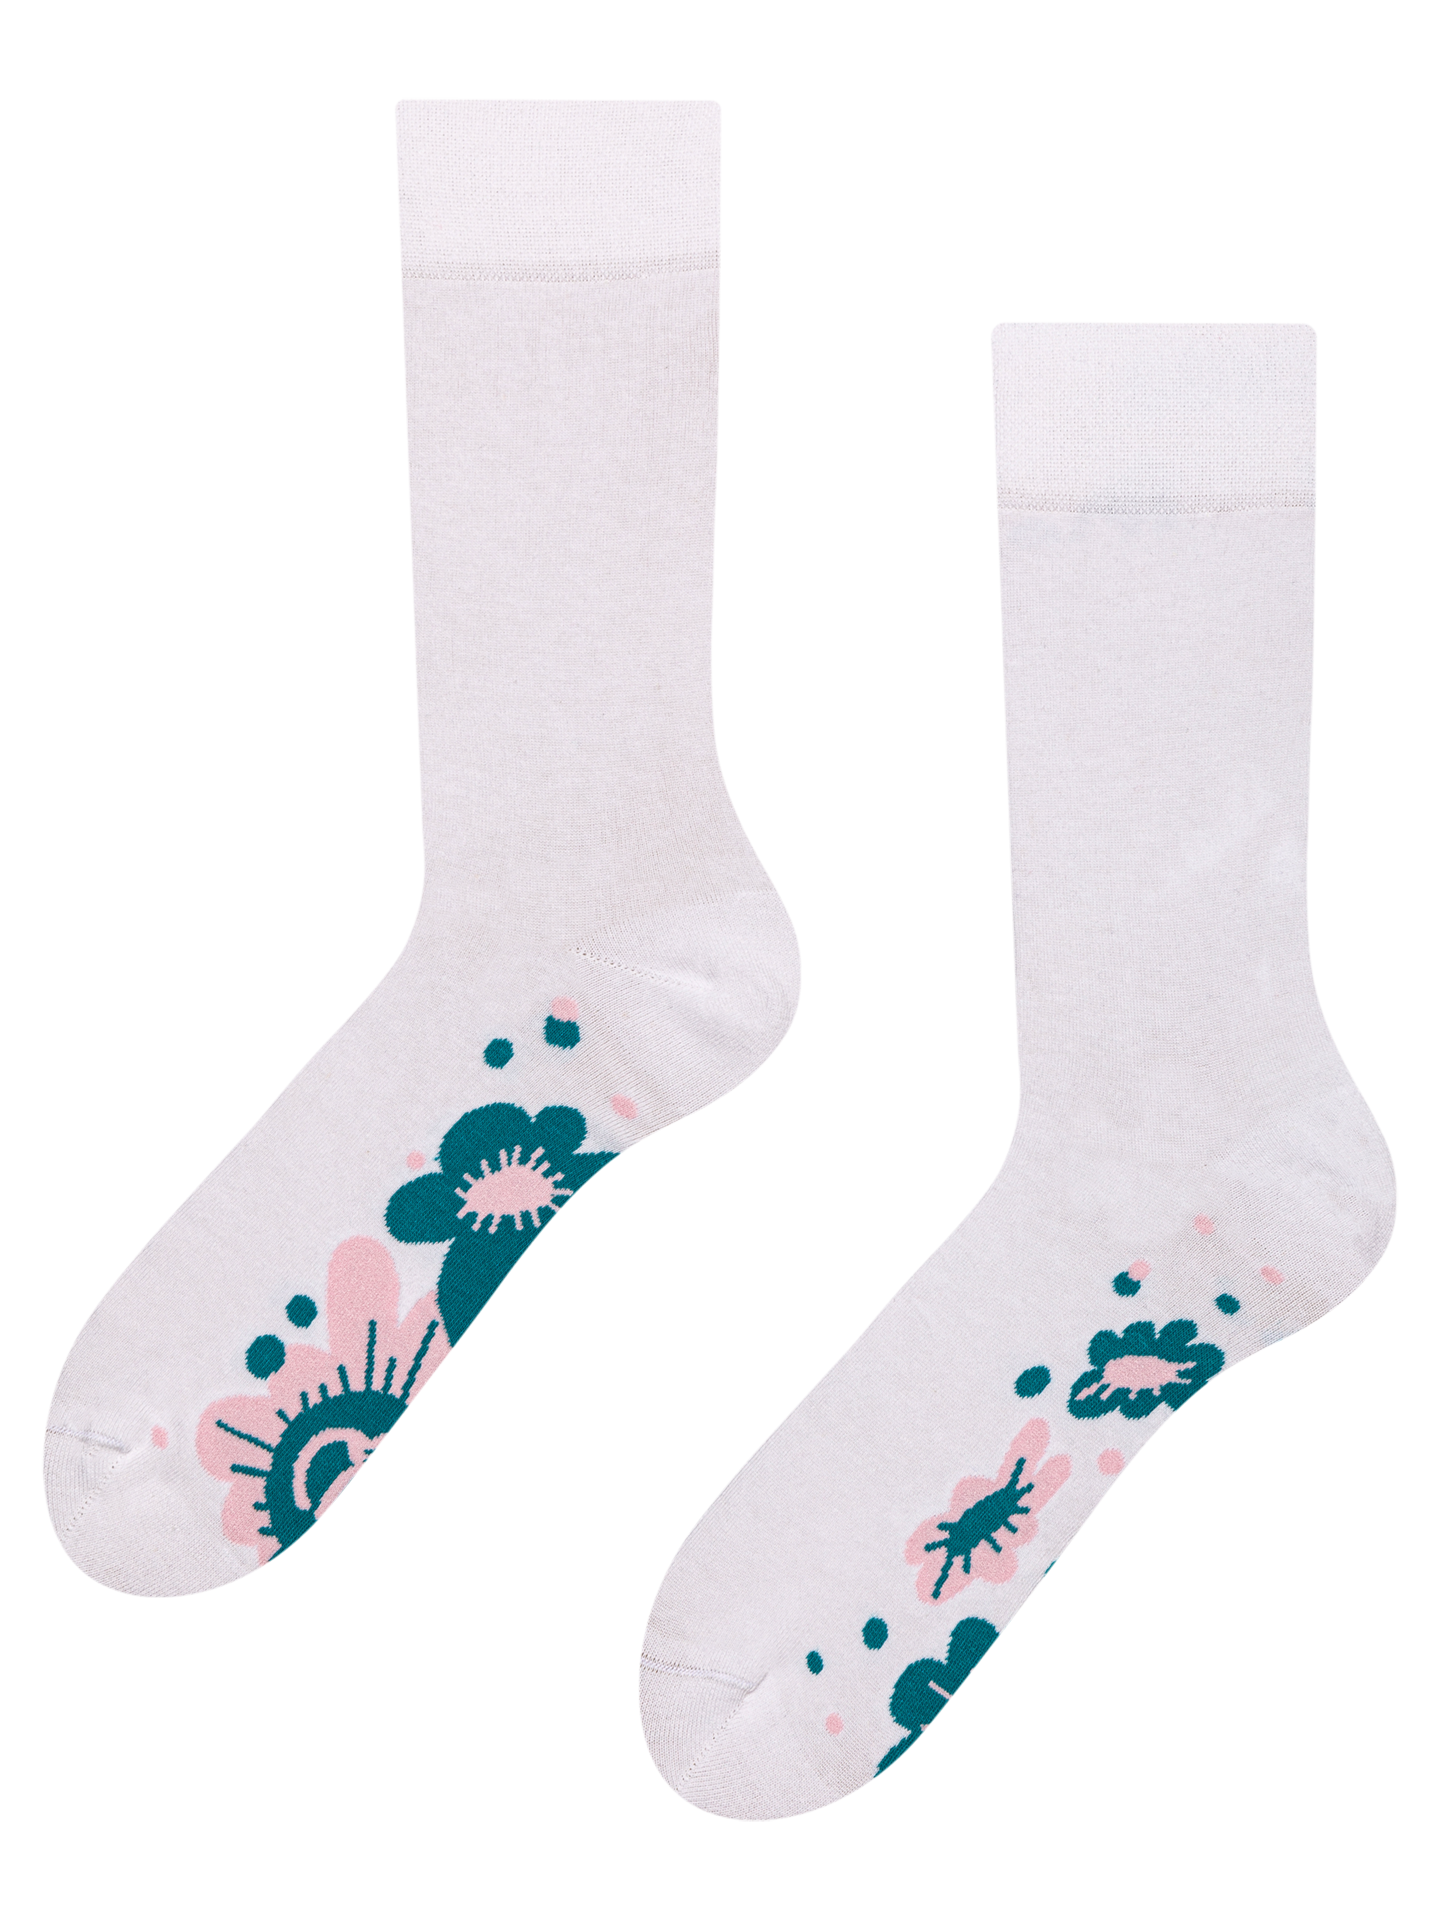 Regular Socks Pastel Flowers